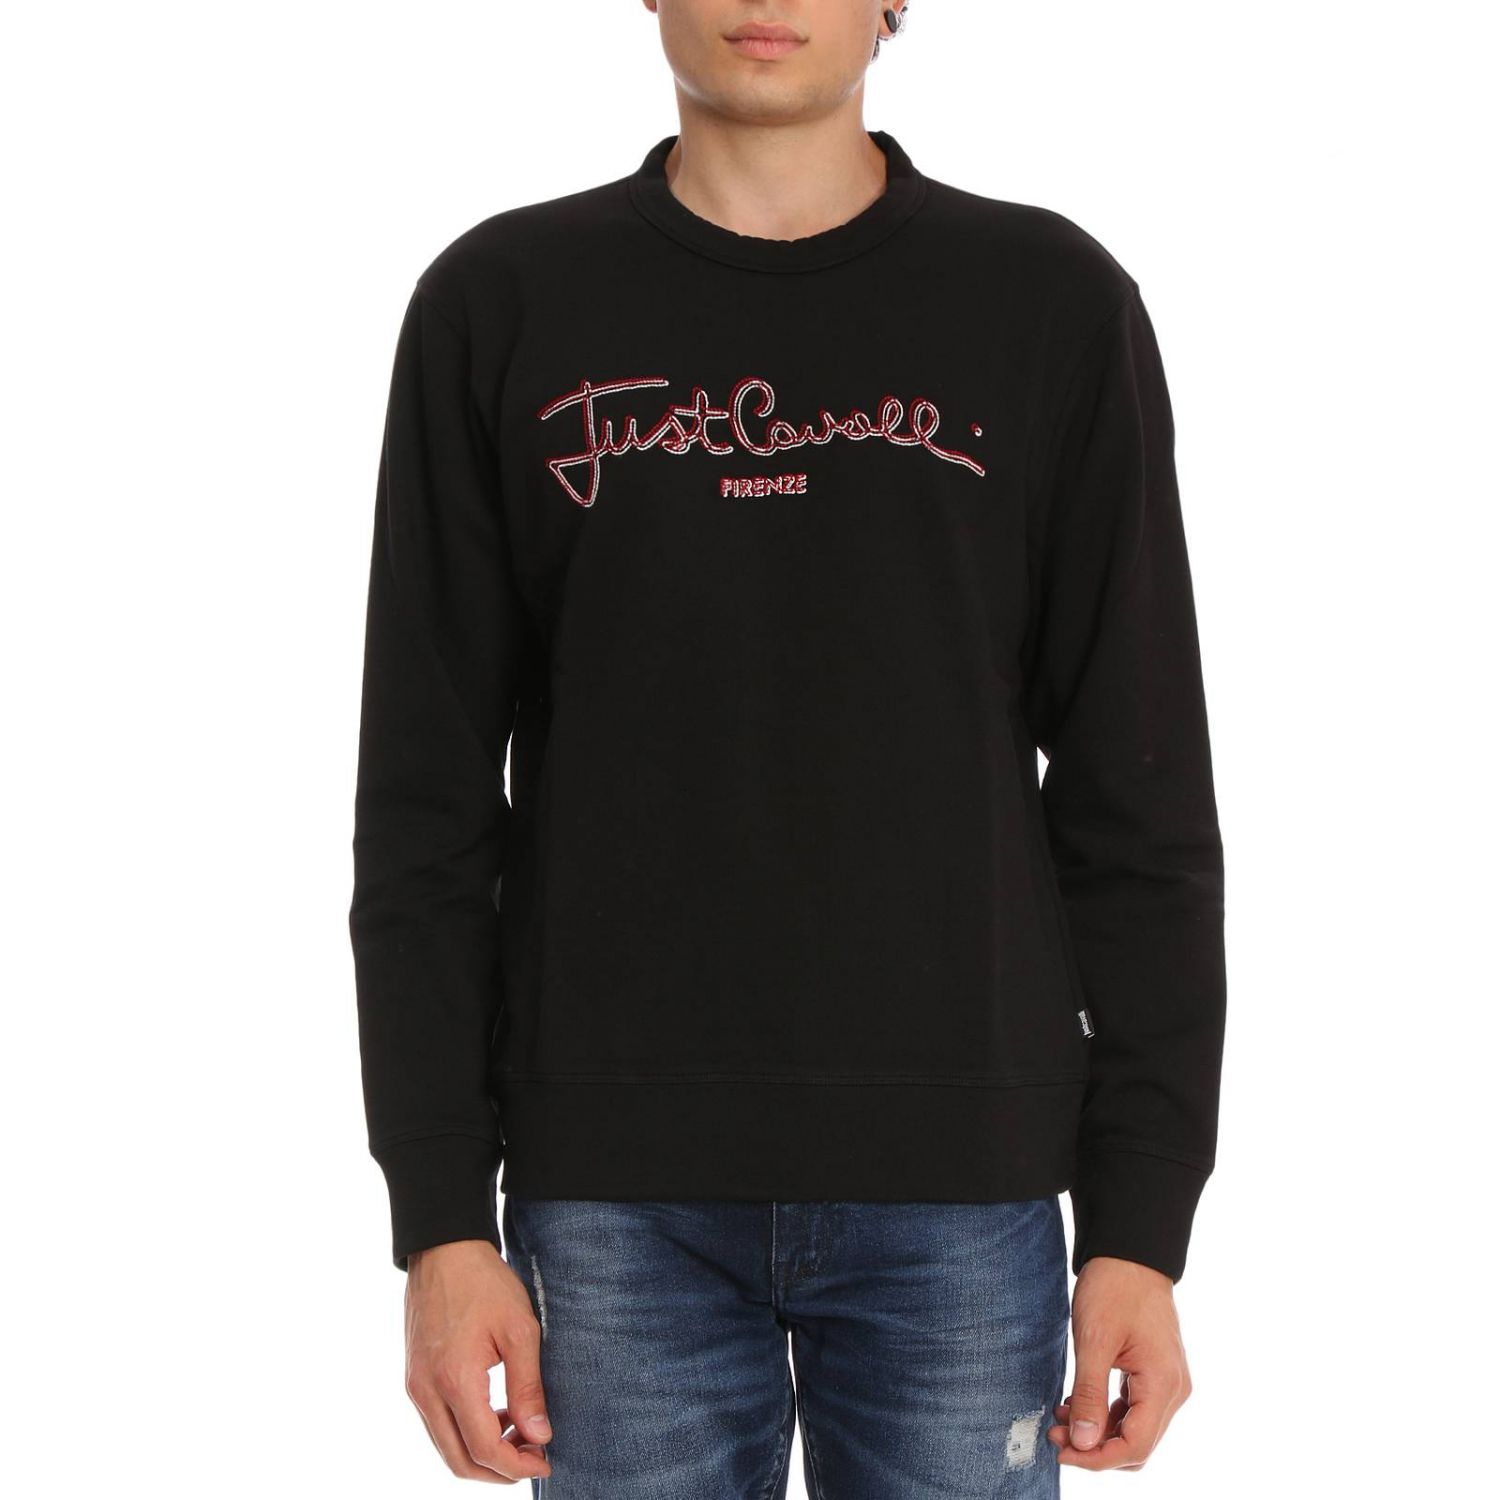 Just Cavalli Outlet: Sweater men | Sweatshirt Just Cavalli Men Black ...